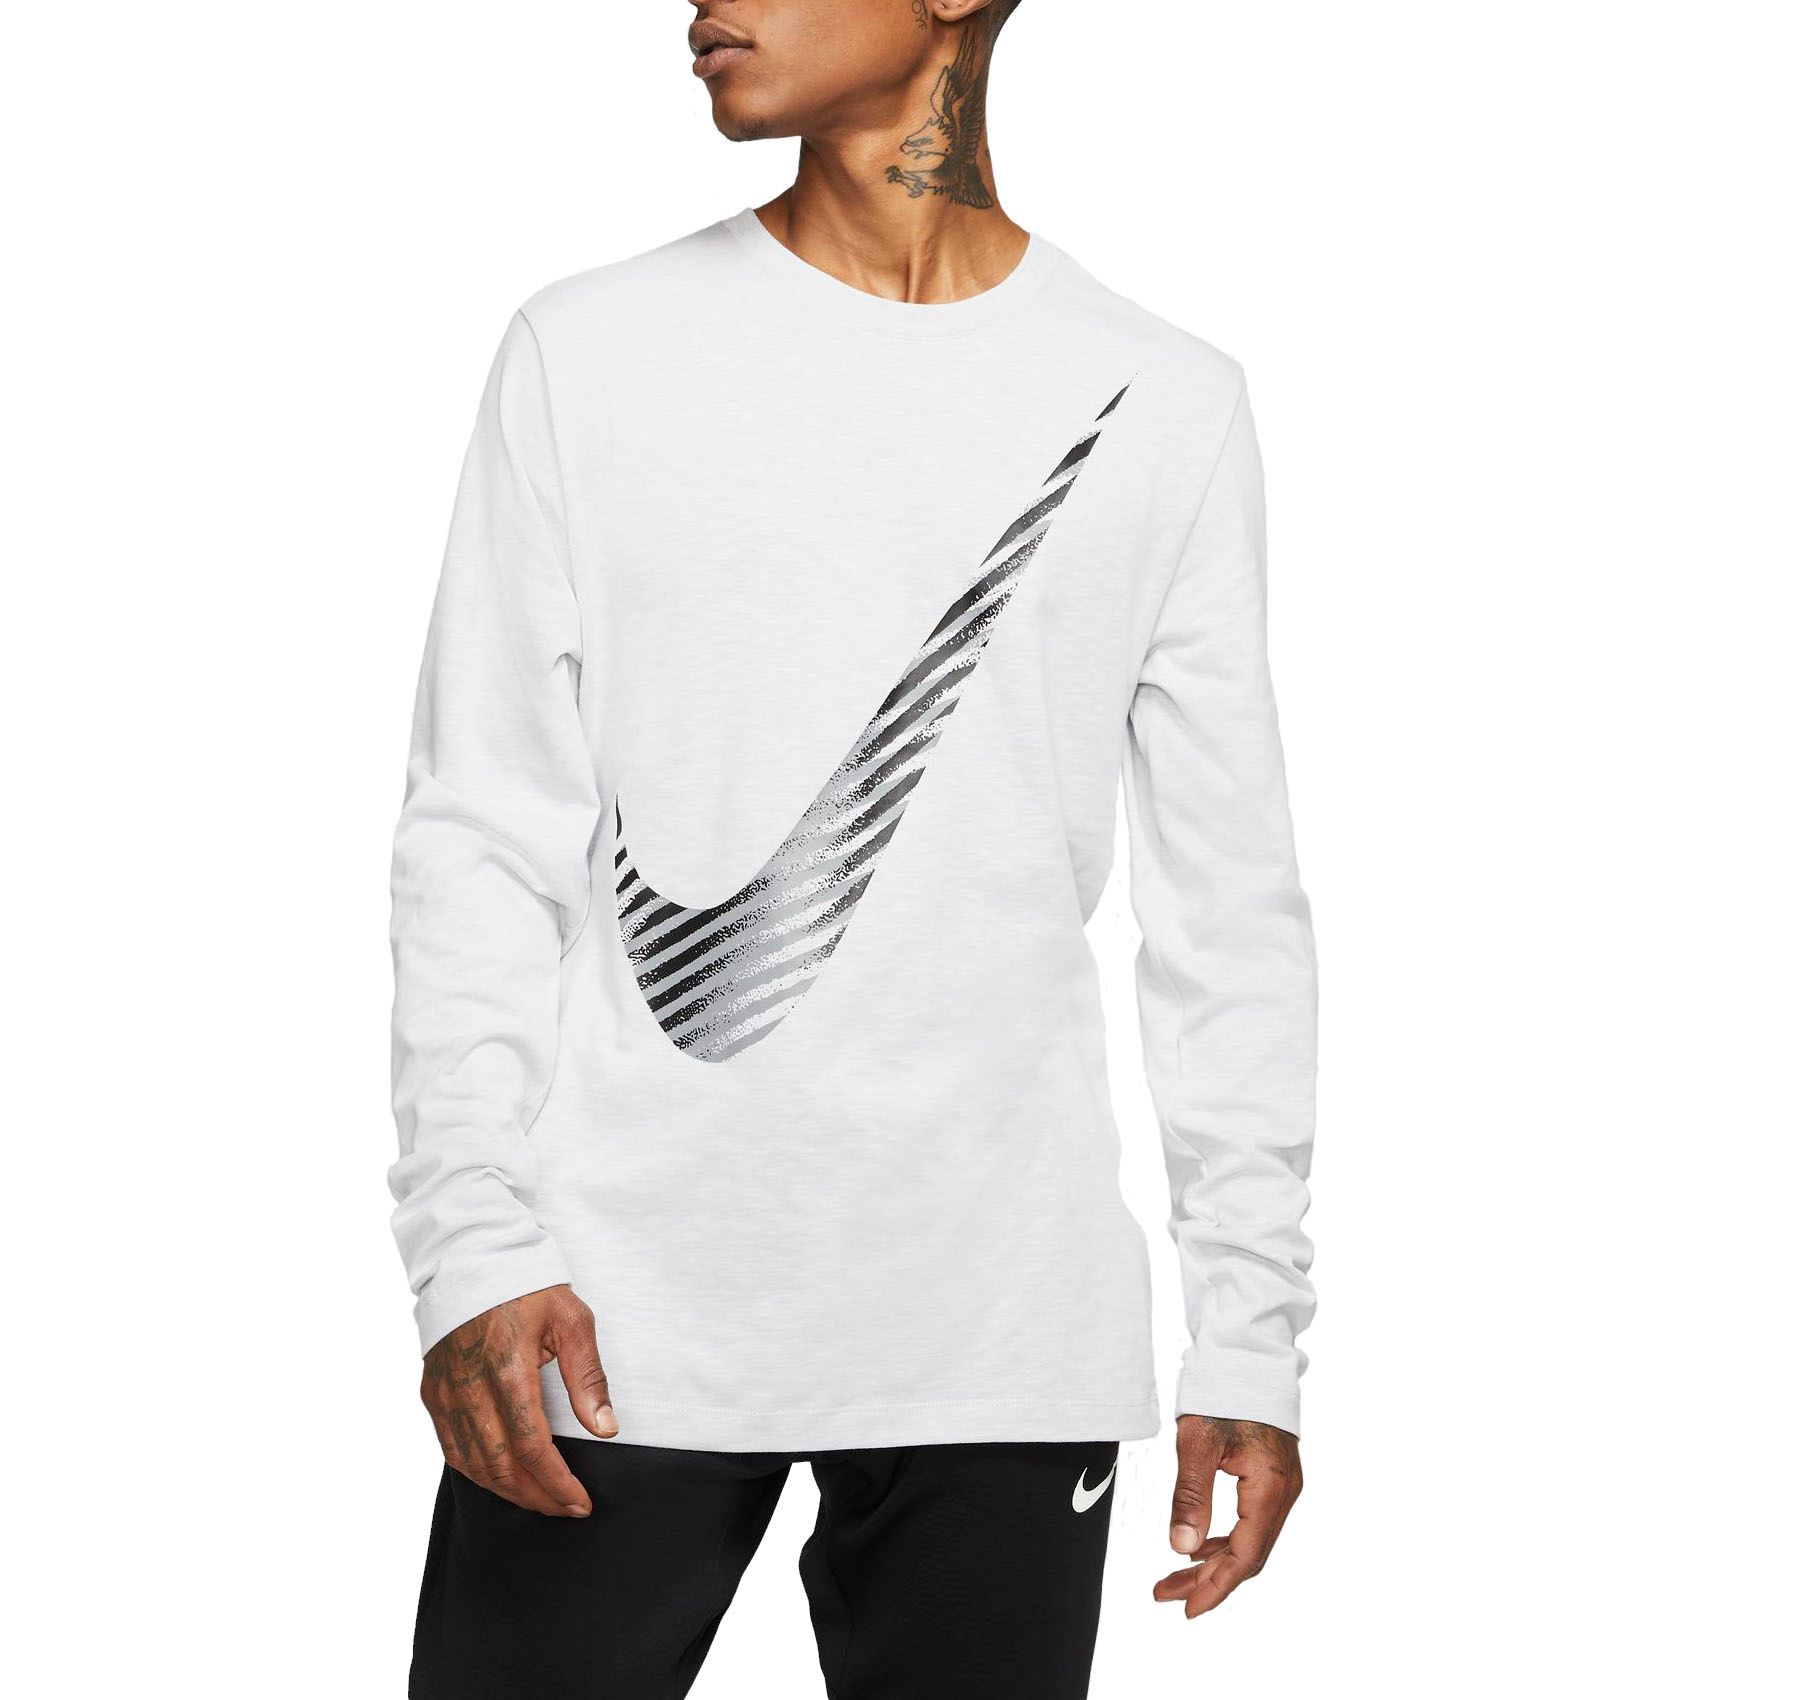 Nike Men's Swoosh Training Long Sleeve Shirt - .50